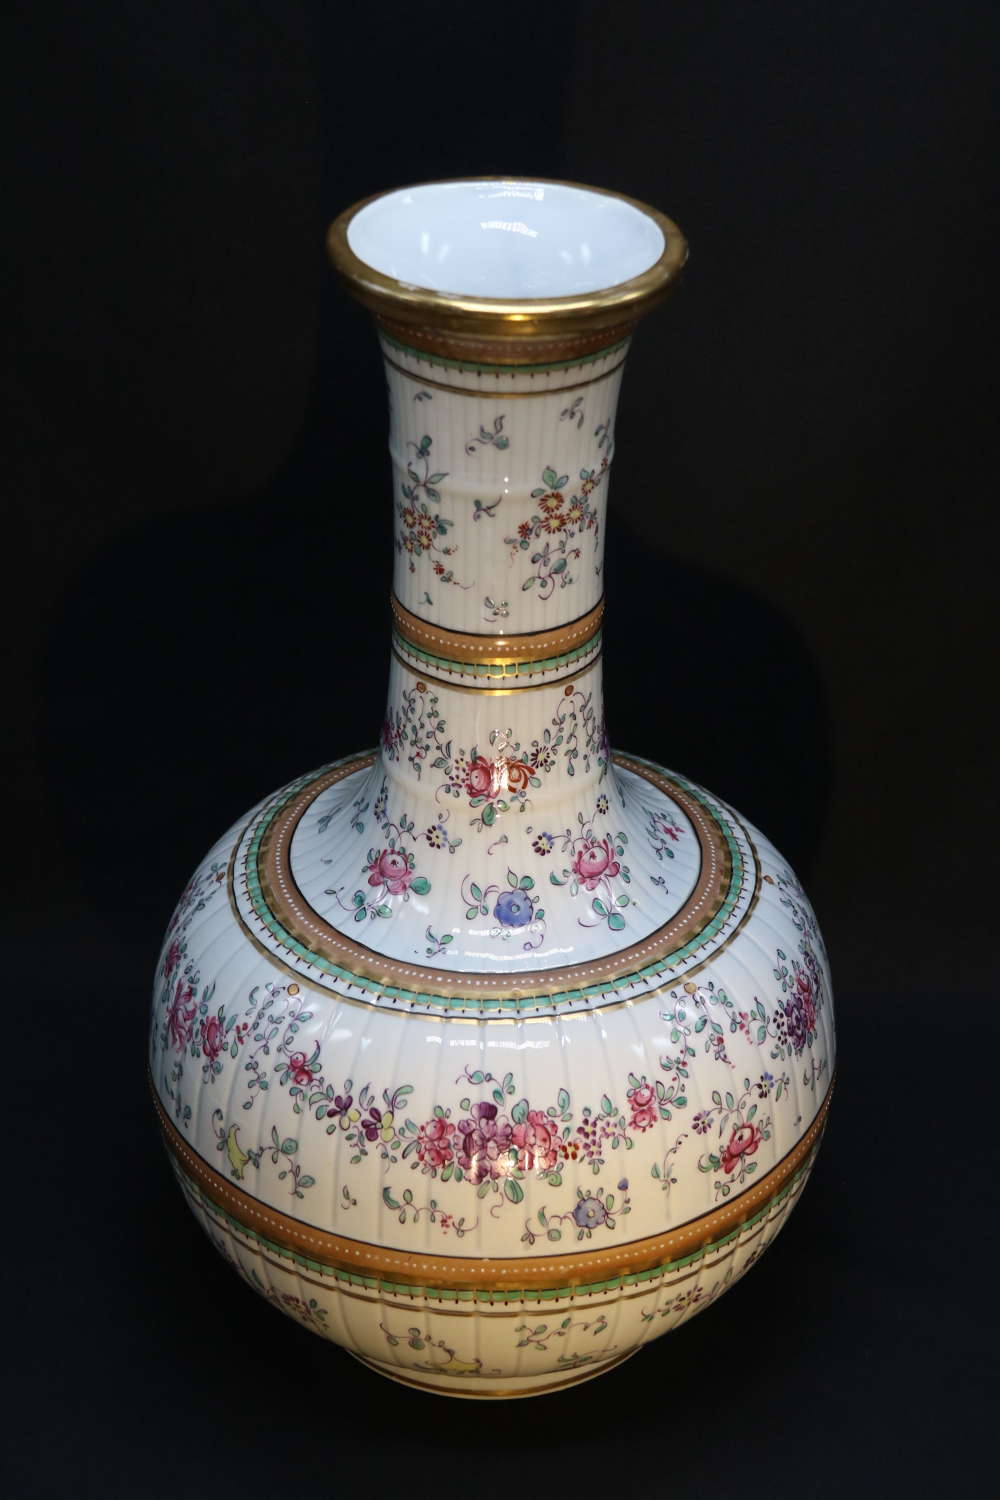 19th century French porcelain vase by Samson of Paris, circa 1890